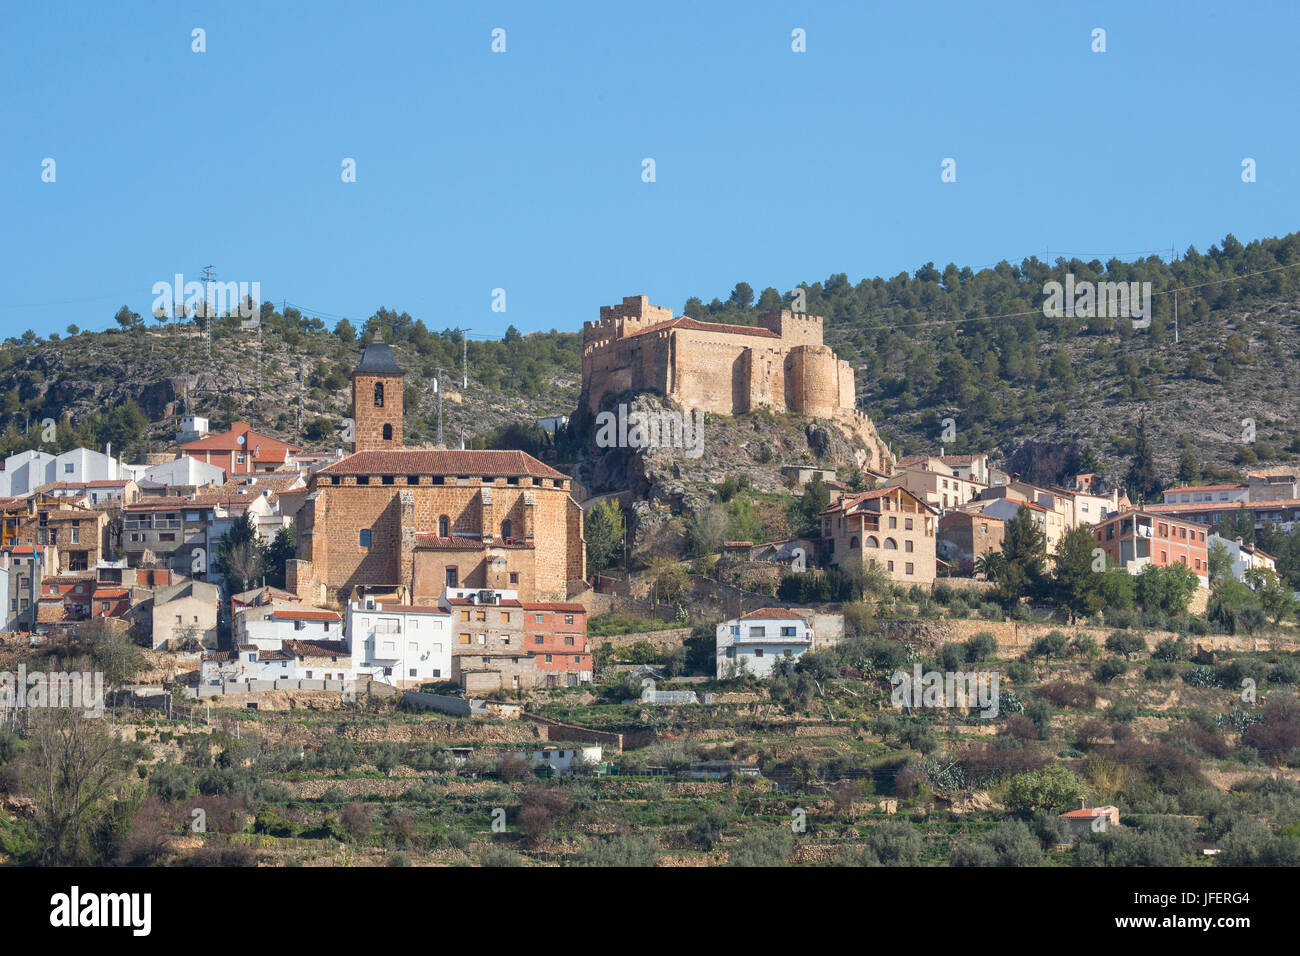 Spain, Castilla La Mancha Region, Albacete Province, Yeste City Stock Photo